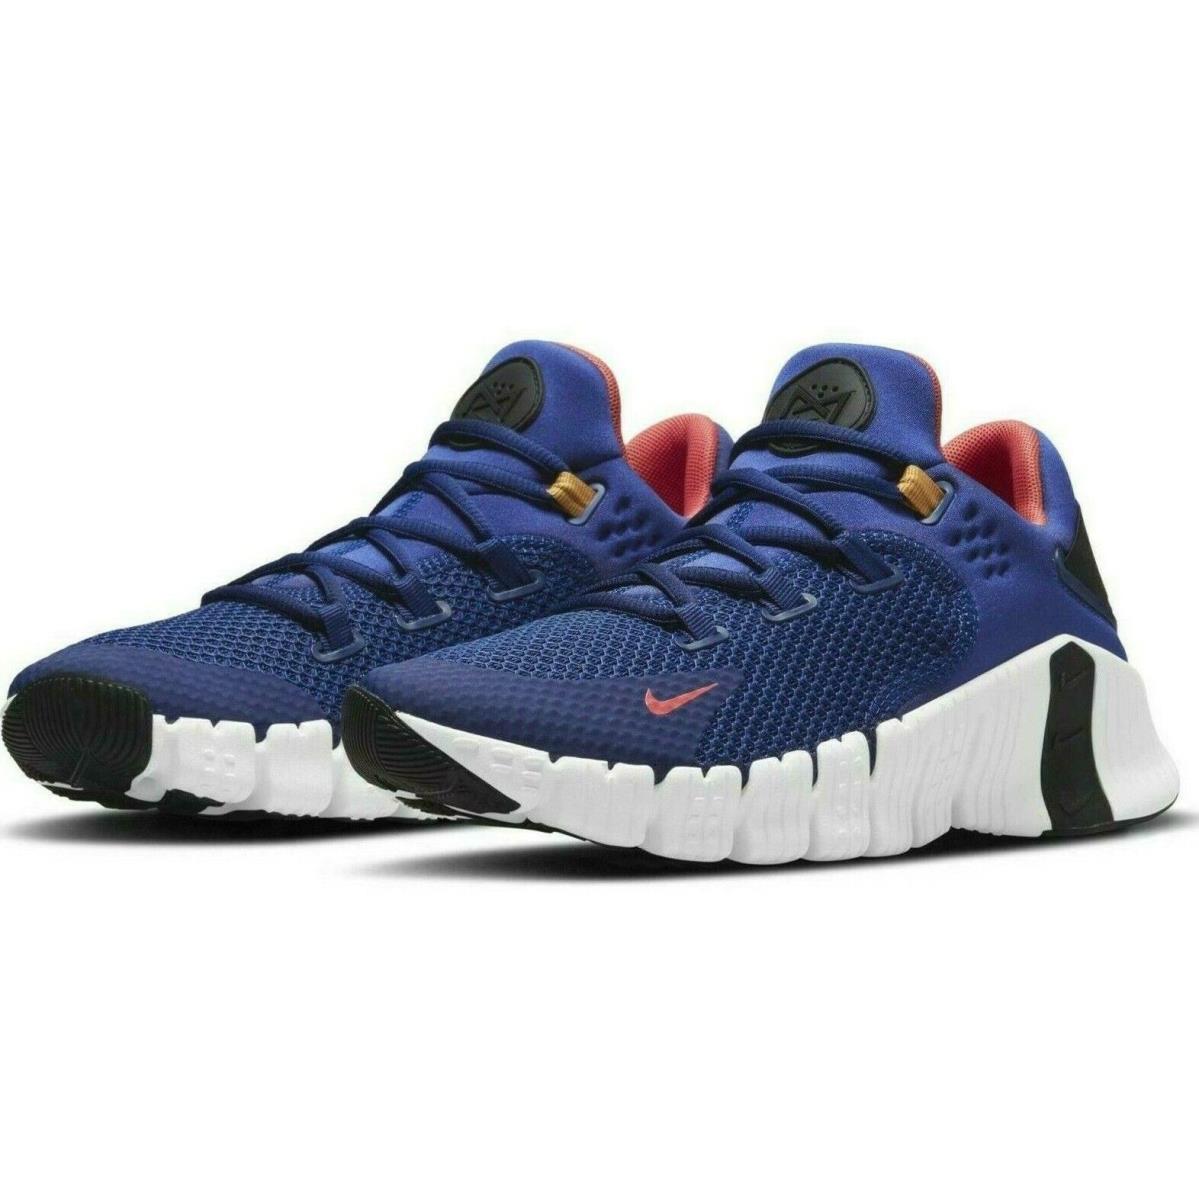 Nike Free Metcon 4 Mens Size 8.5 Sneaker Shoes CT3886 448 Deep Royal Blue